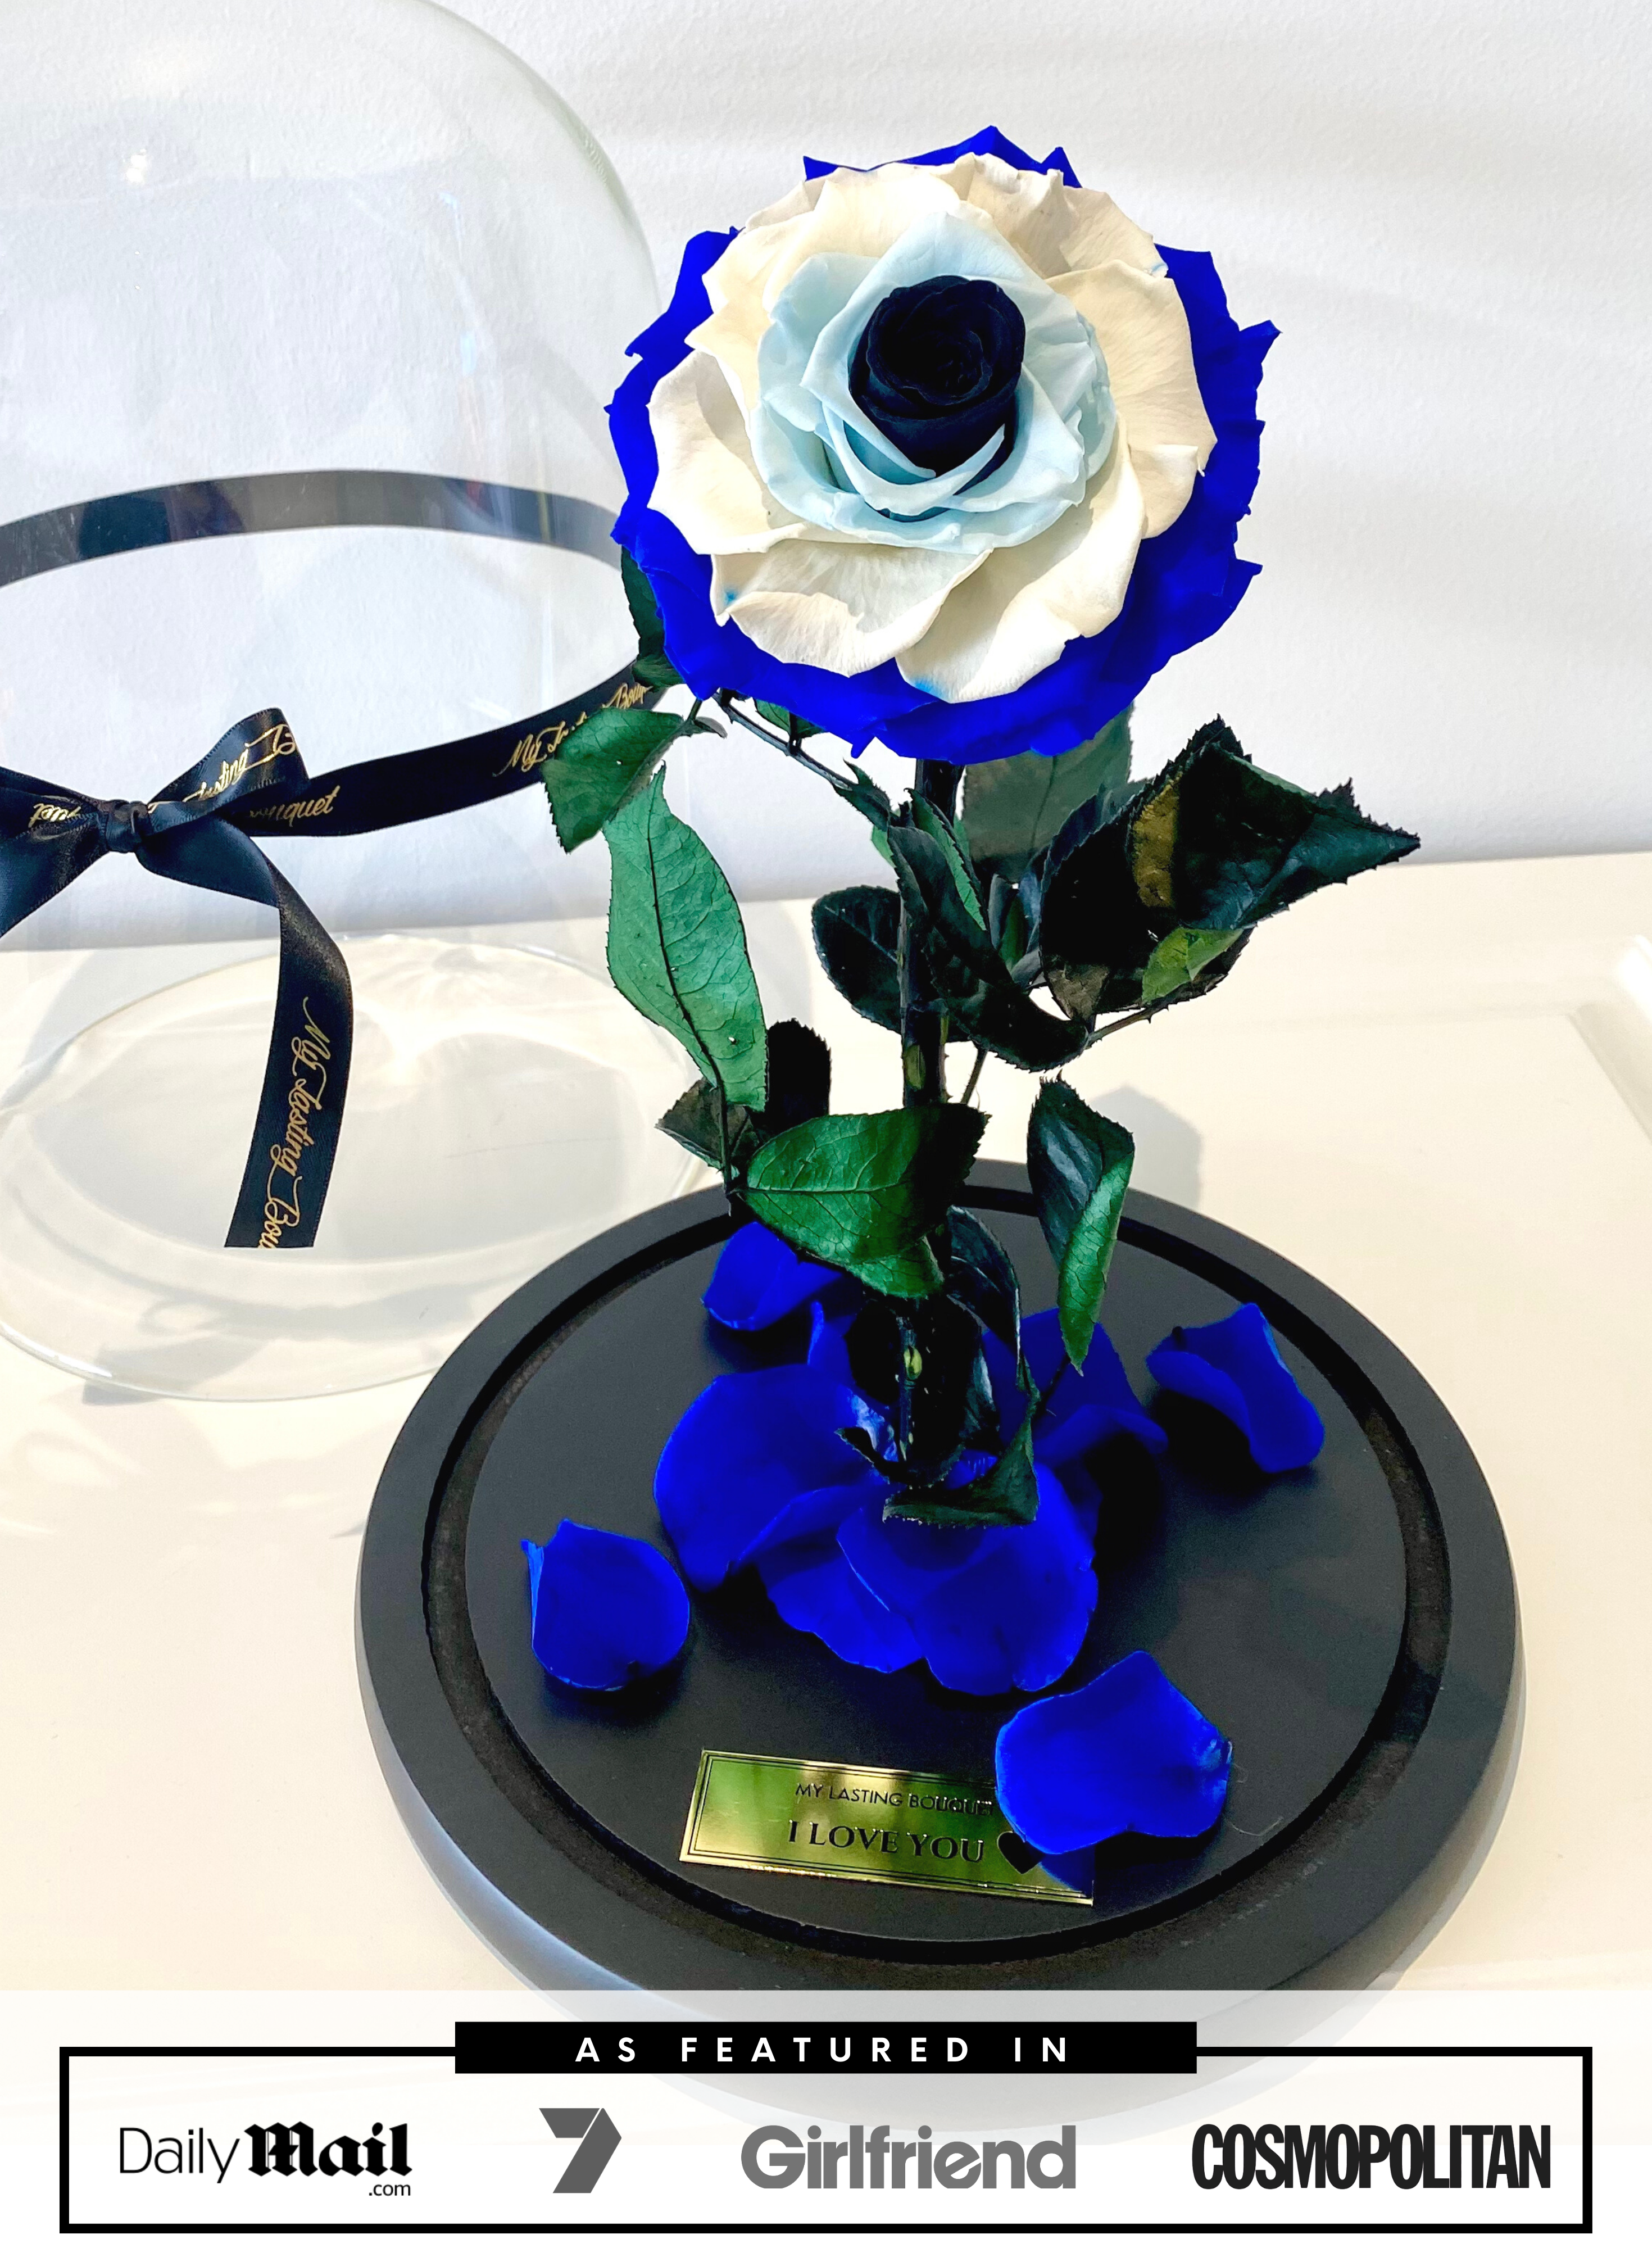 Evil Eye Rose Belle - My Lasting Bouquet